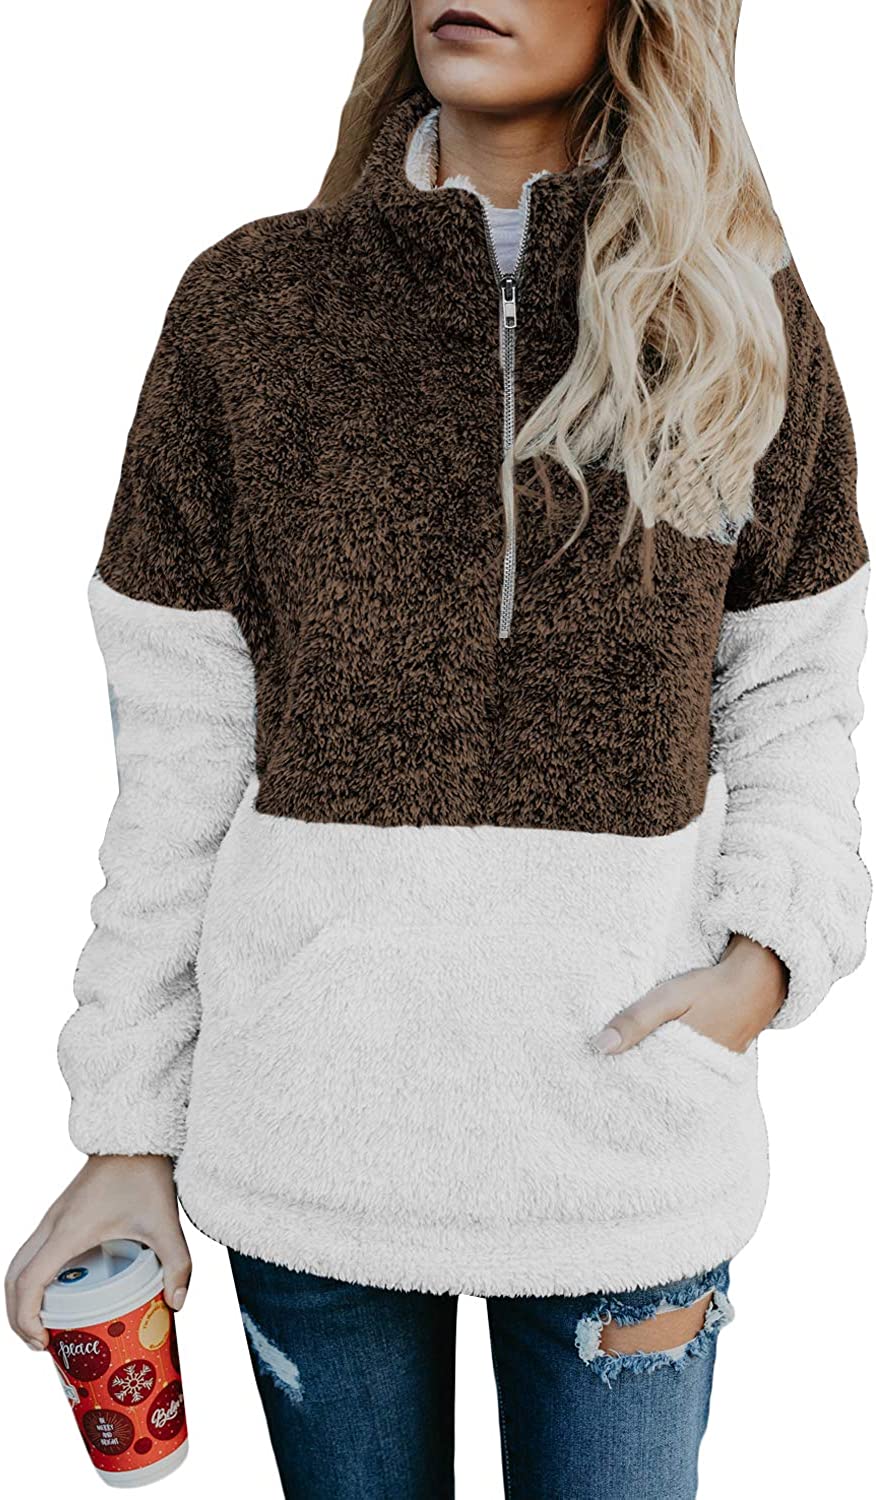 Aleumdr Womens Oversized Warm Fuzzy Hoodies Cozy Loose 1/4 Zipper Pullover Hooded Sweatshirt Outwear with Pockets